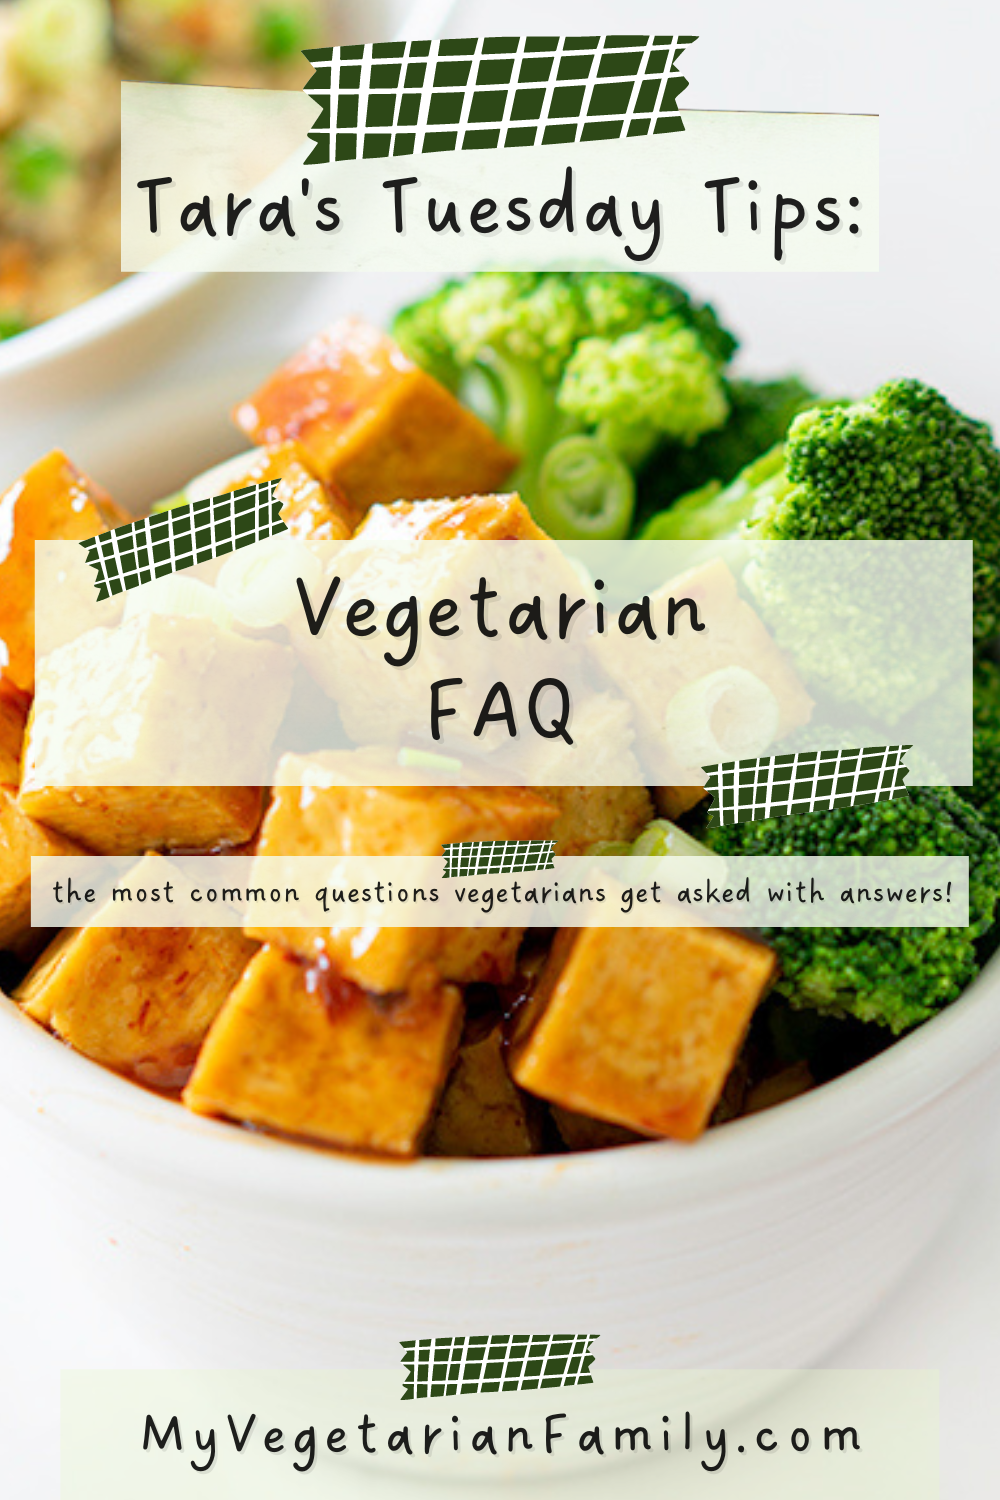 Vegetarian FAQ | Tara's Tuesday Tips | My Vegetarian Family #nutritiontips #howtobevegetarian